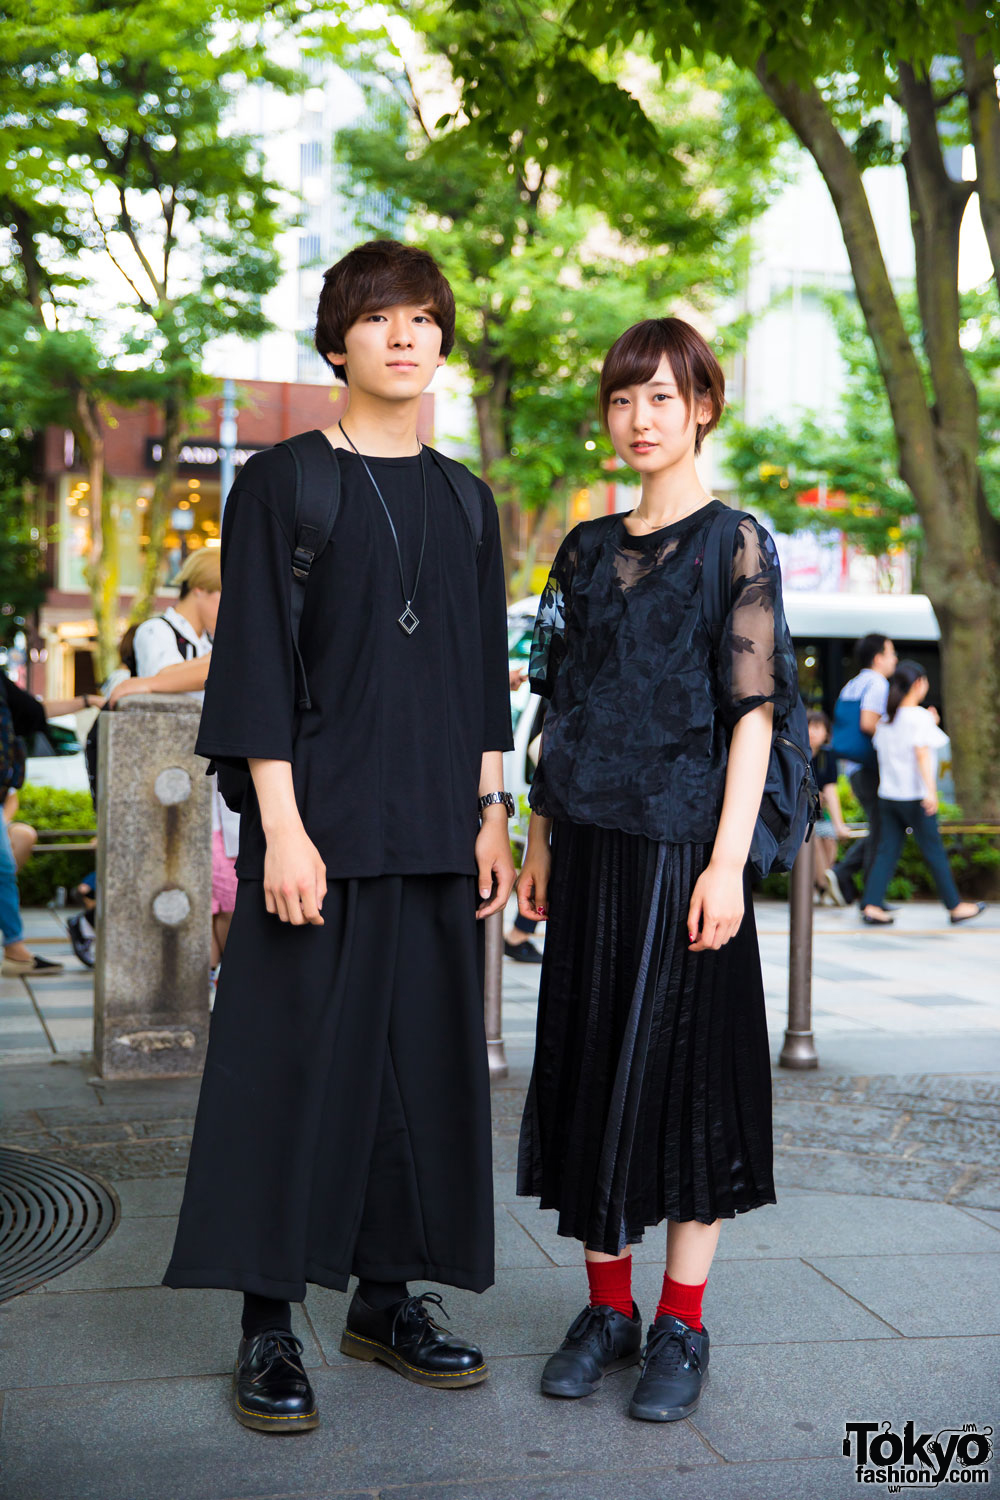 Harajuku Duo in All Black Minimalist Street Styles w/ 603, GGD & Dr. Martens